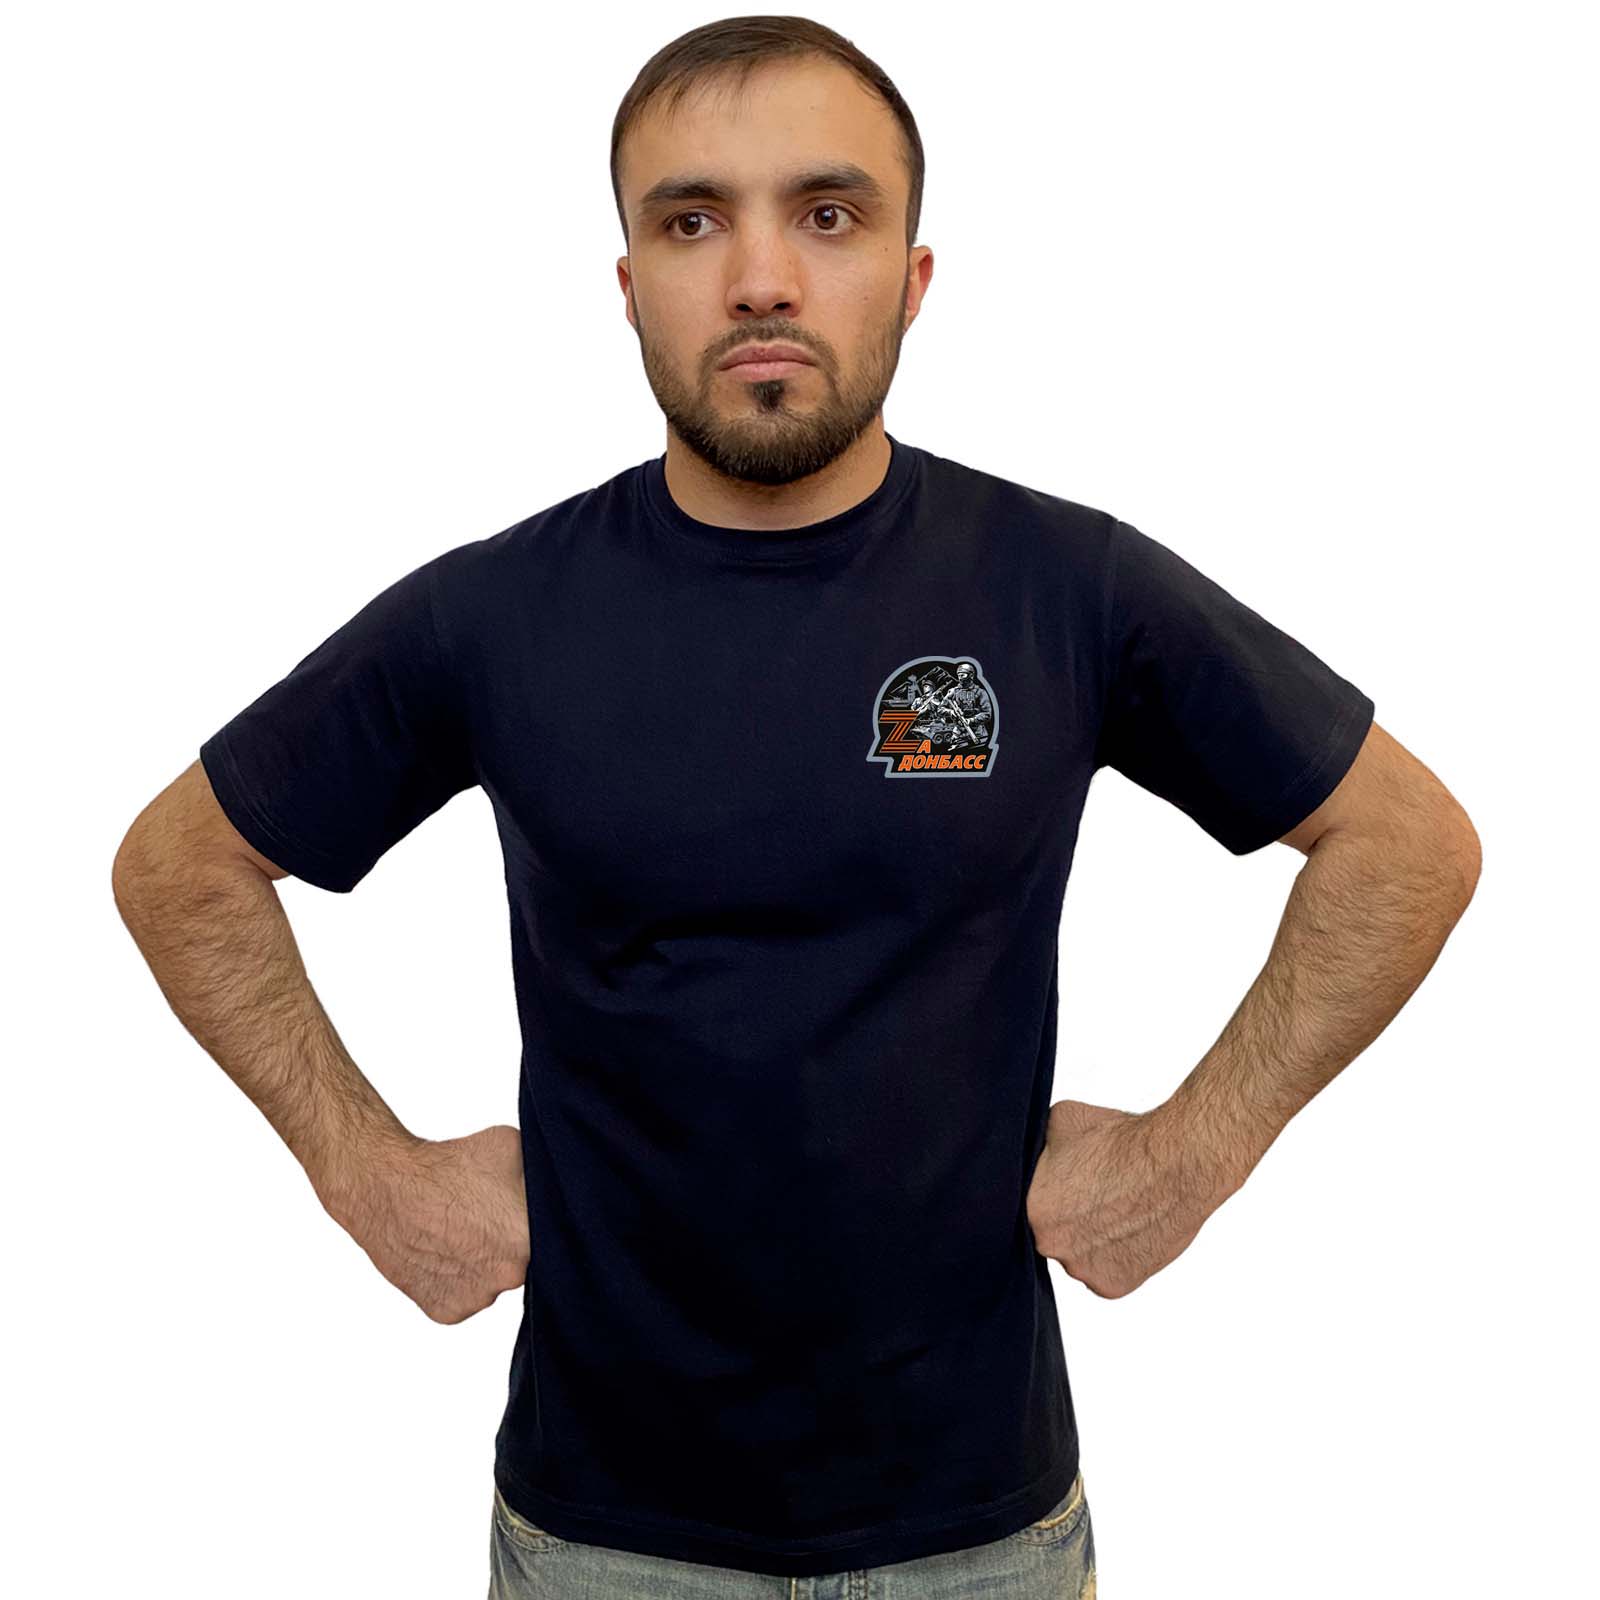 Тёмно-синяя футболка с термопереводкой "Zа Донбасс"